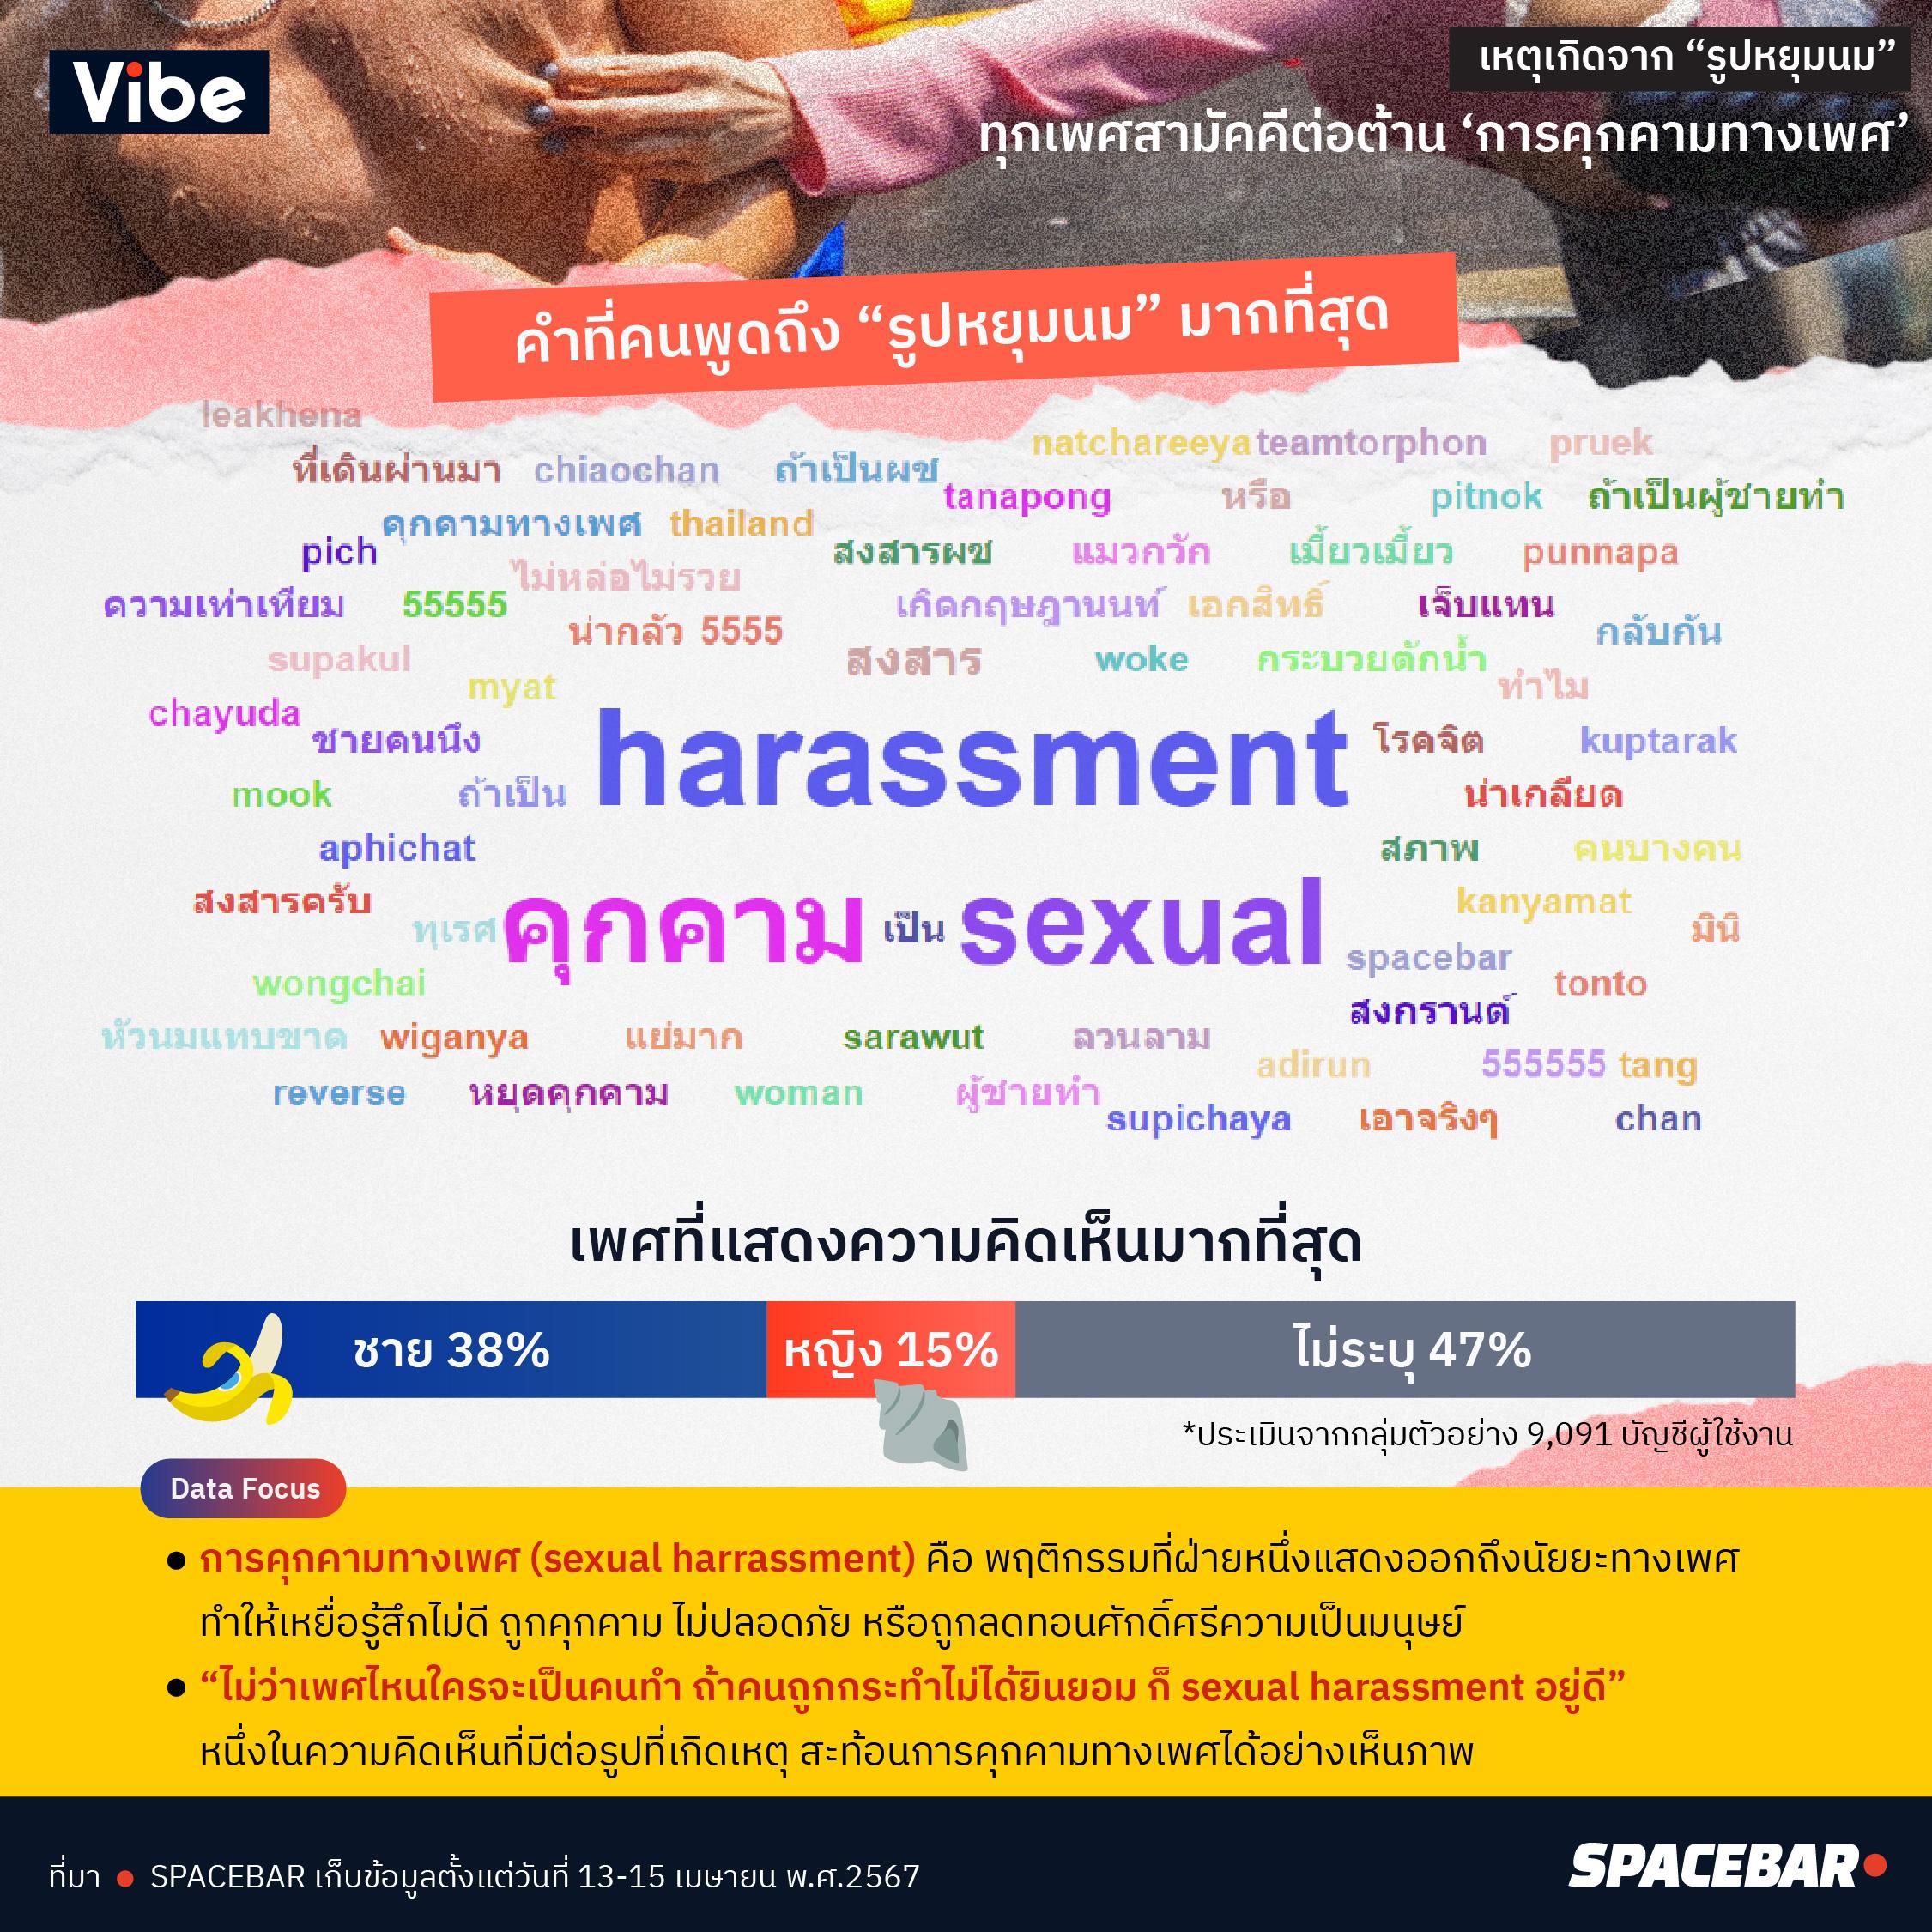 spacebar สเปซบาร์, สงกรานต์, หมับเข้าให้, หยุมนม, คุกคามทางเพศ, sexual harrassment